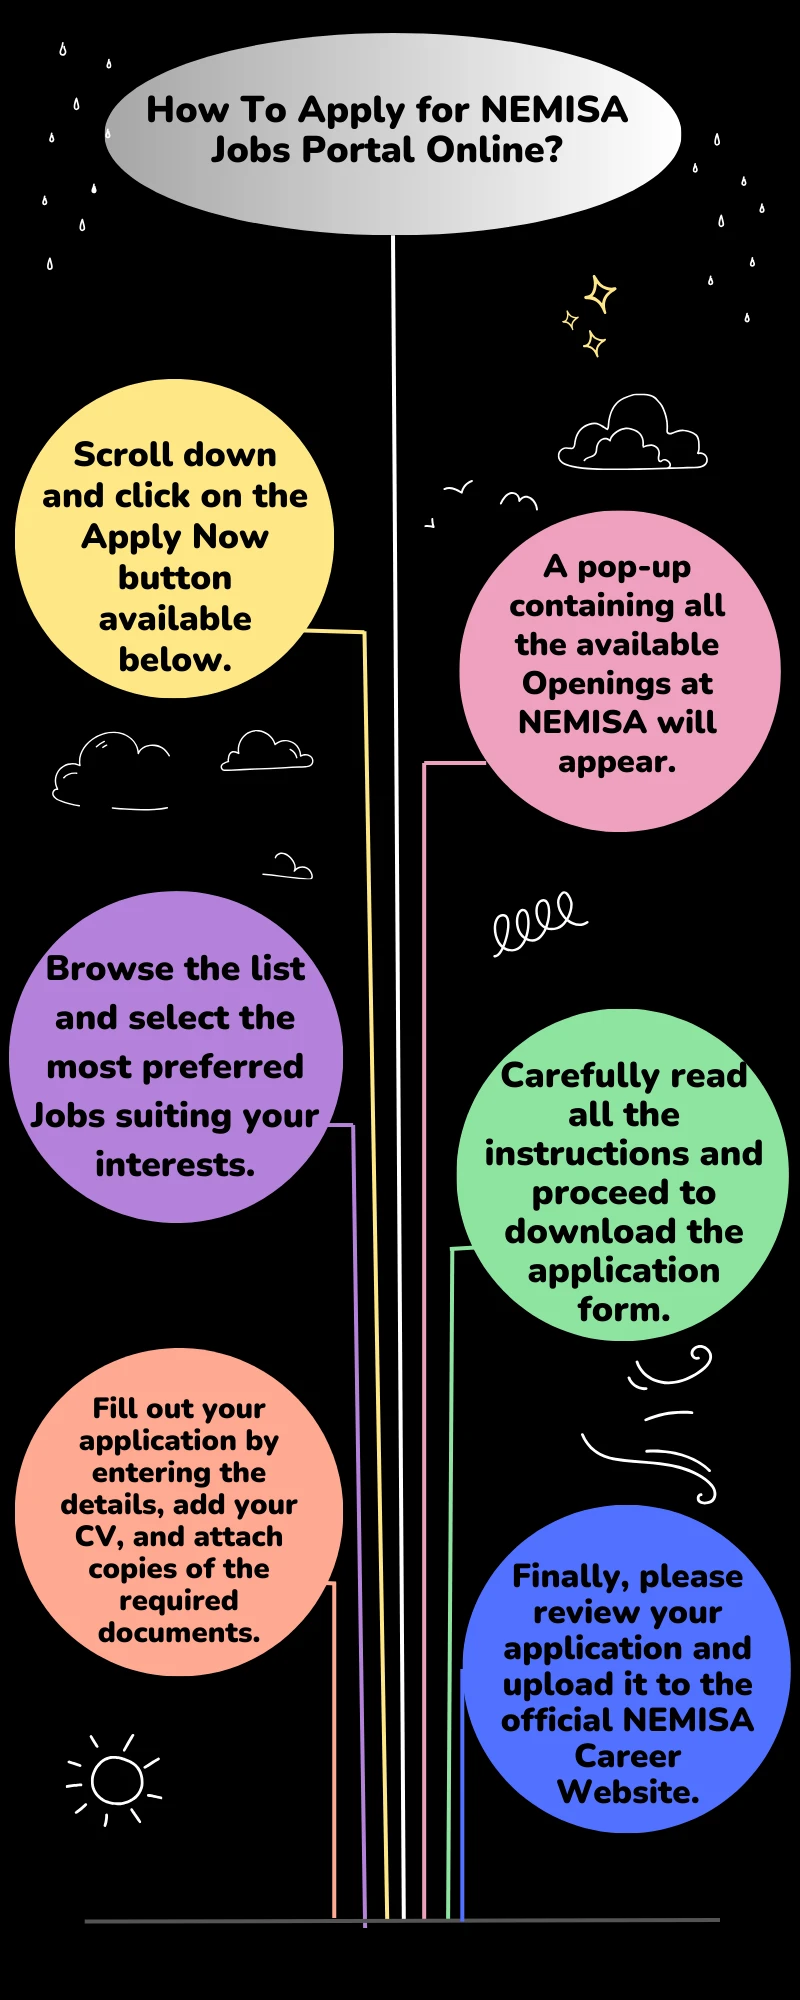 How To Apply for NEMISA Jobs Portal Online?